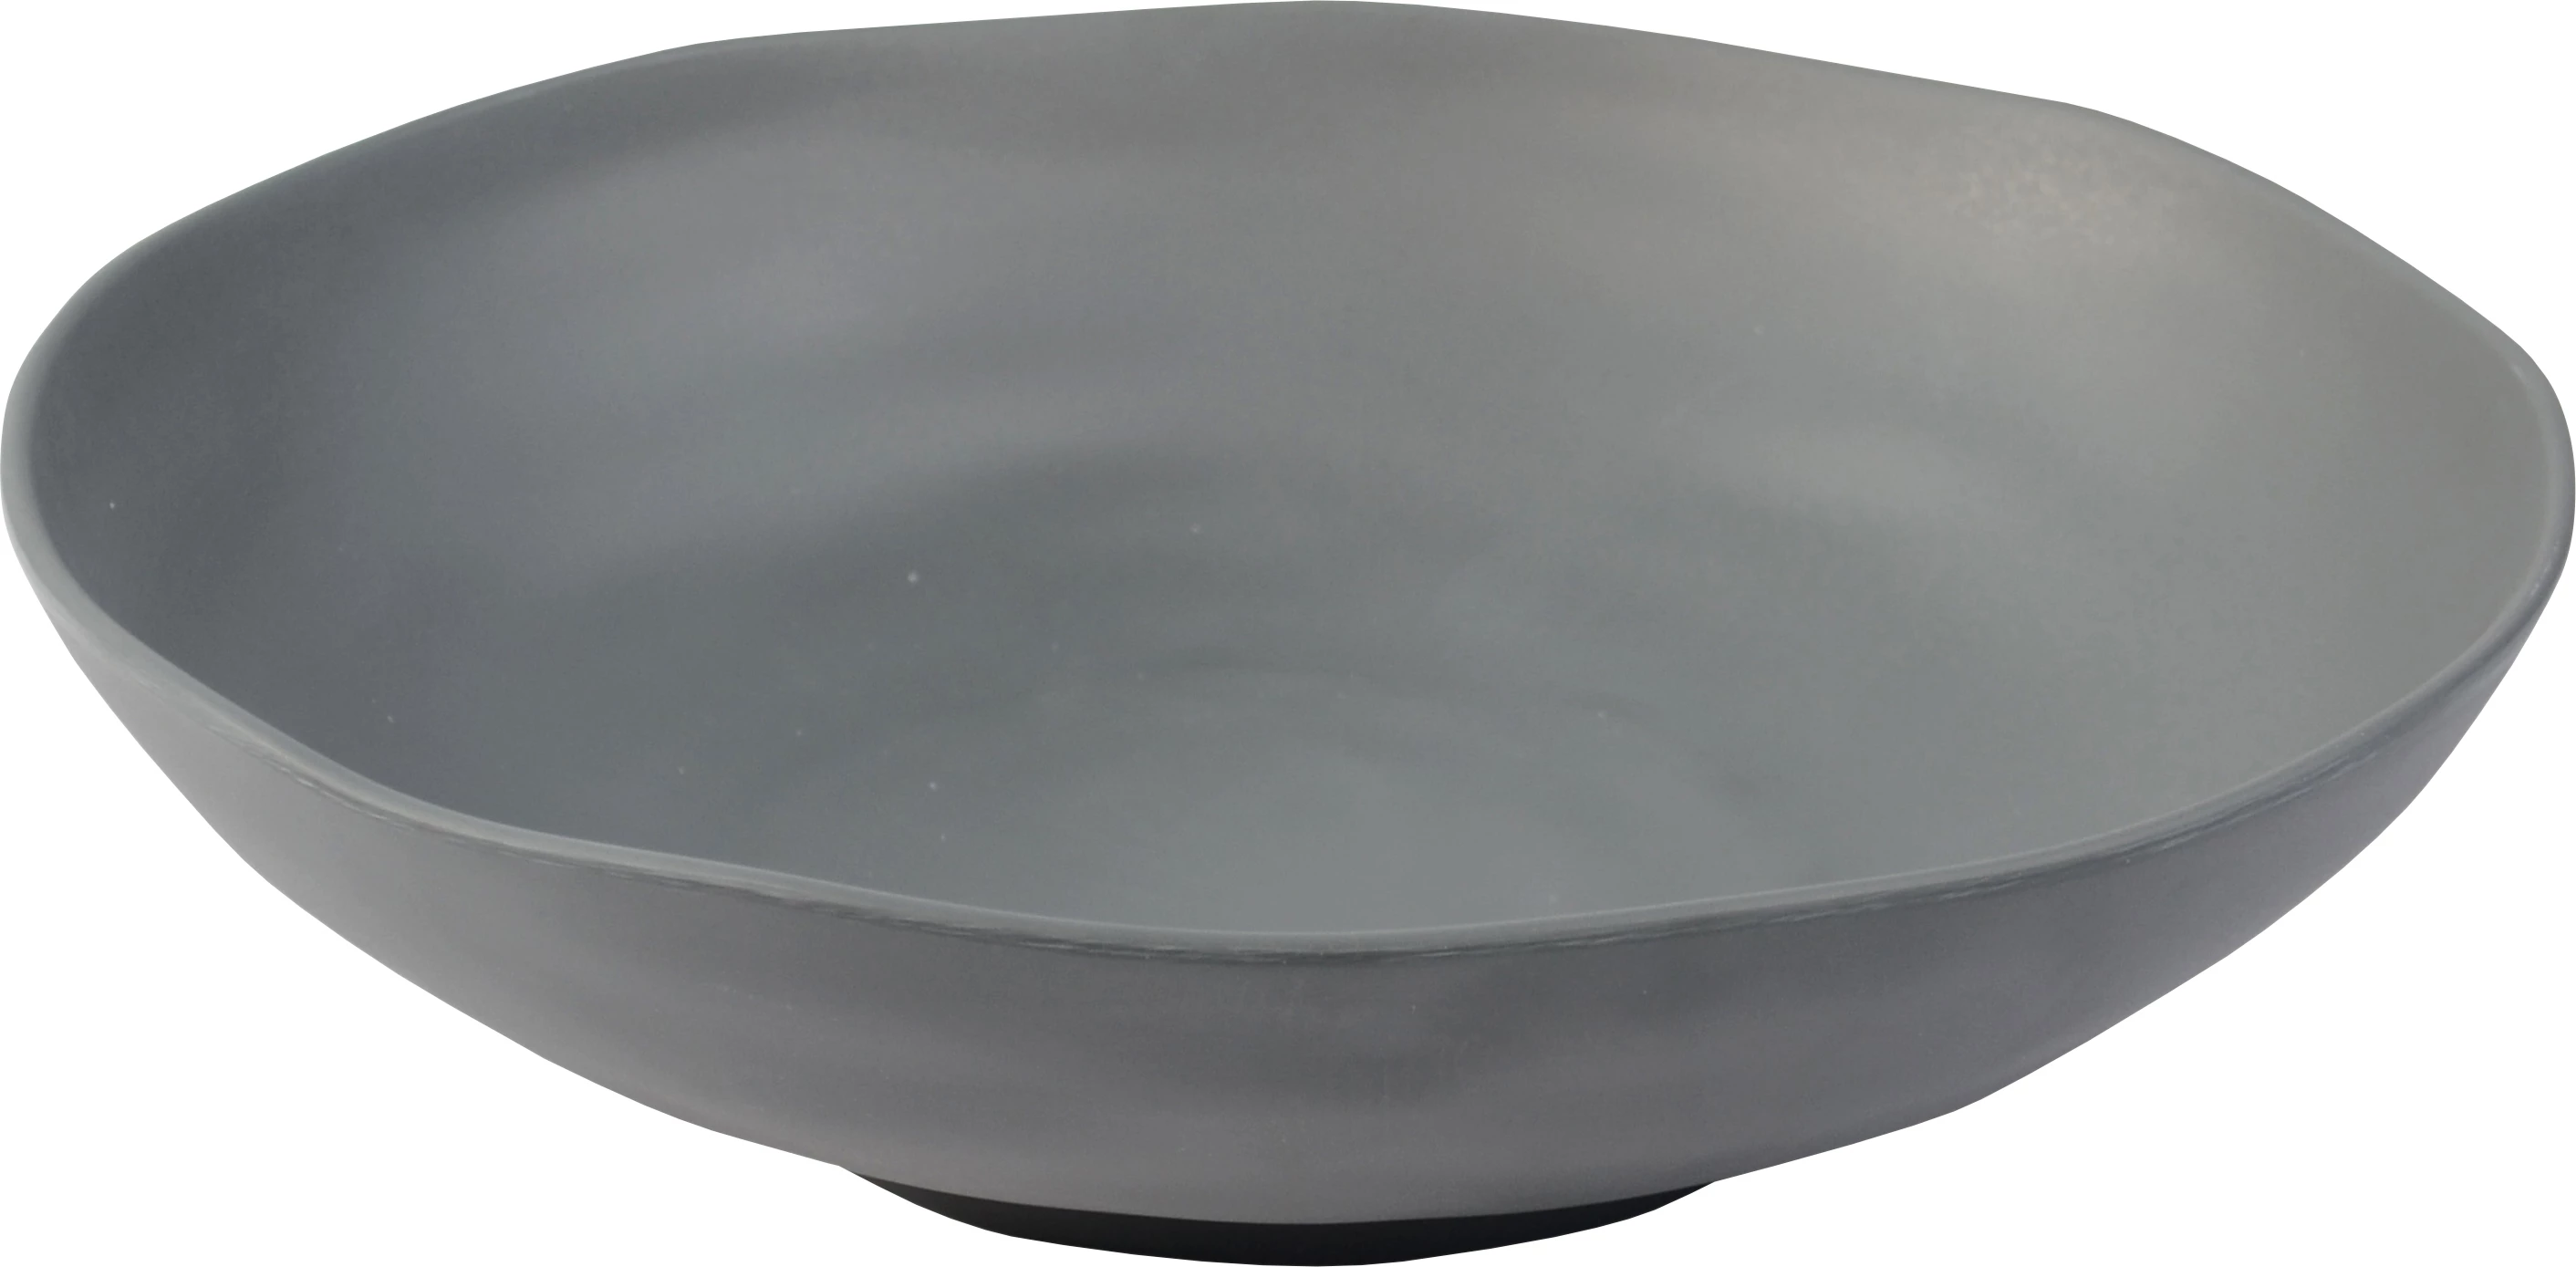 Dalebrook Pigment skål, grå, 400 cl, ø33,8 cm